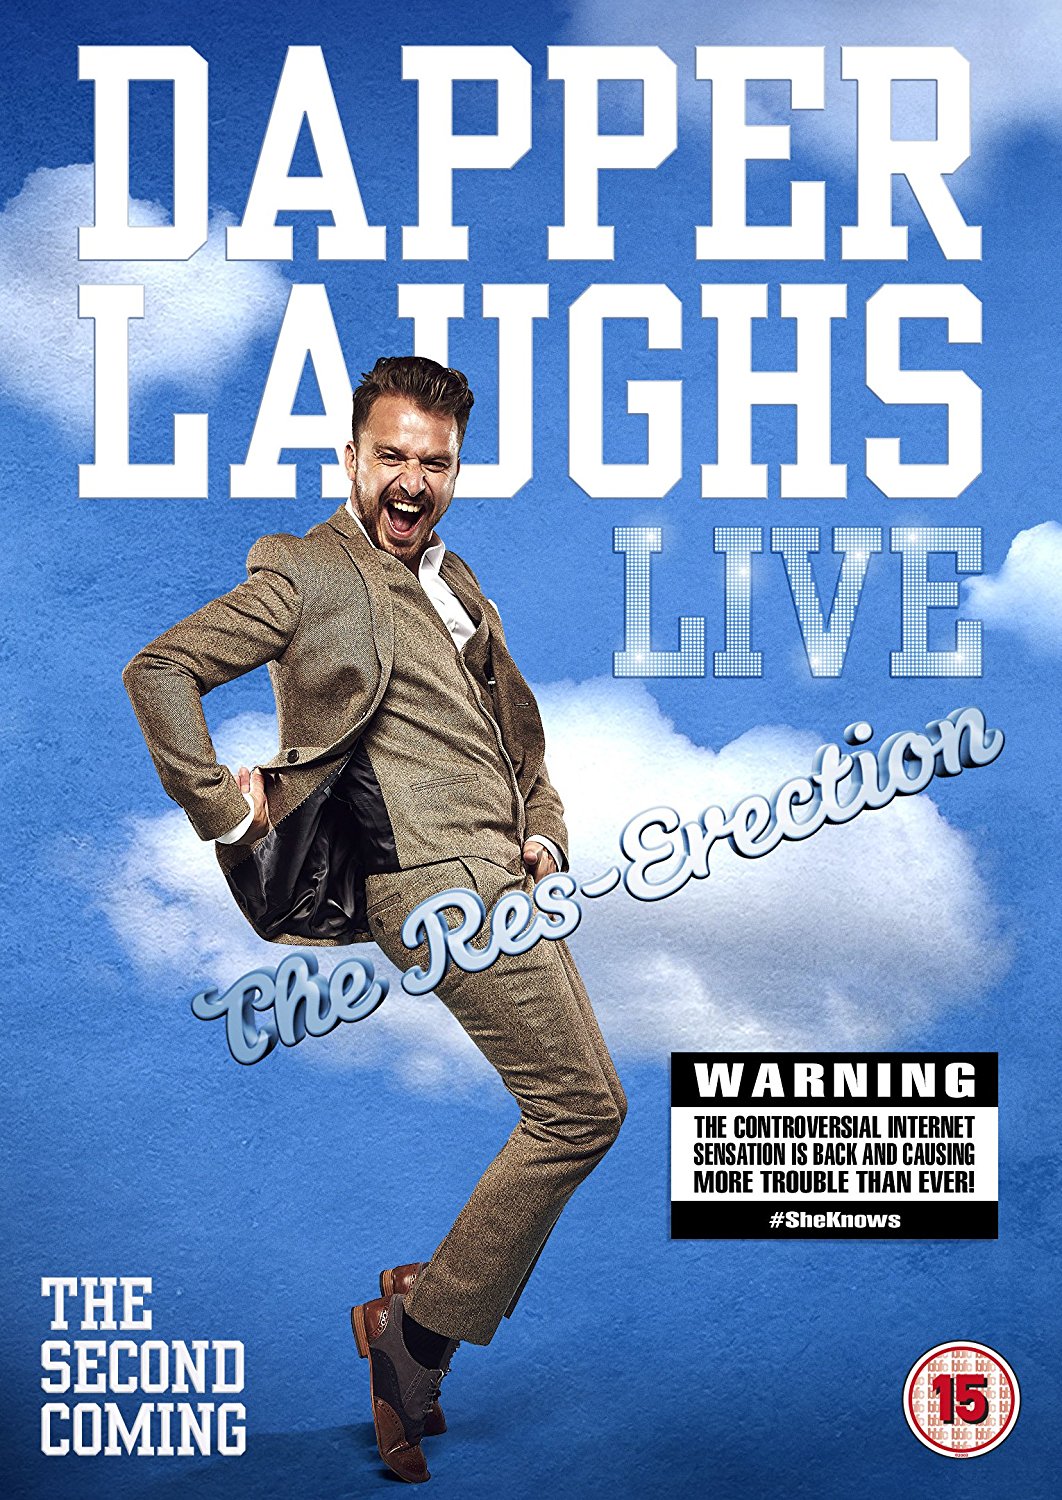 Dapper Laughs Live: The Res-Erection (DVD)